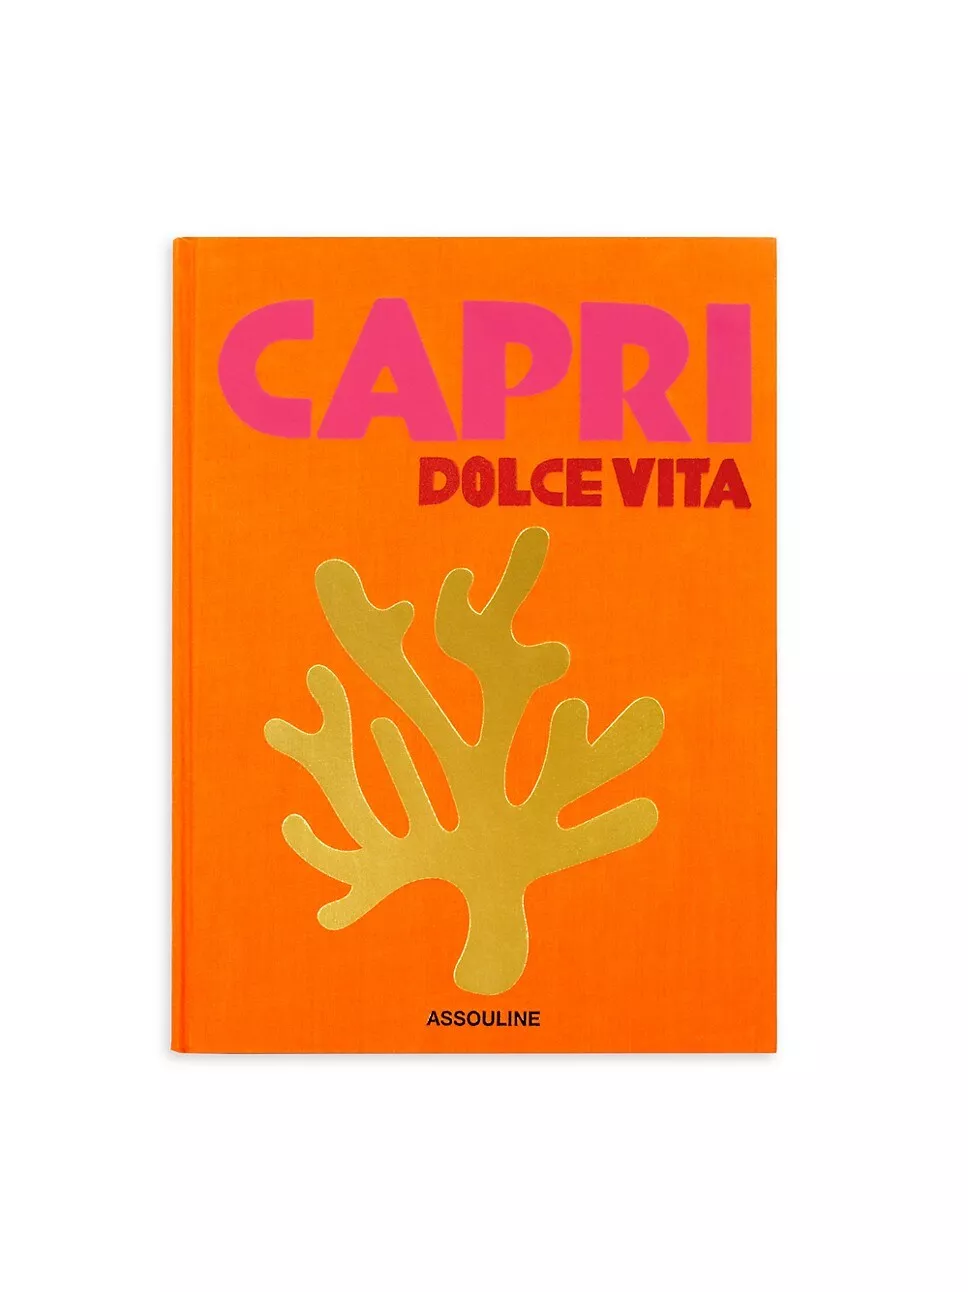 Capri Dolce Vita curated on LTK